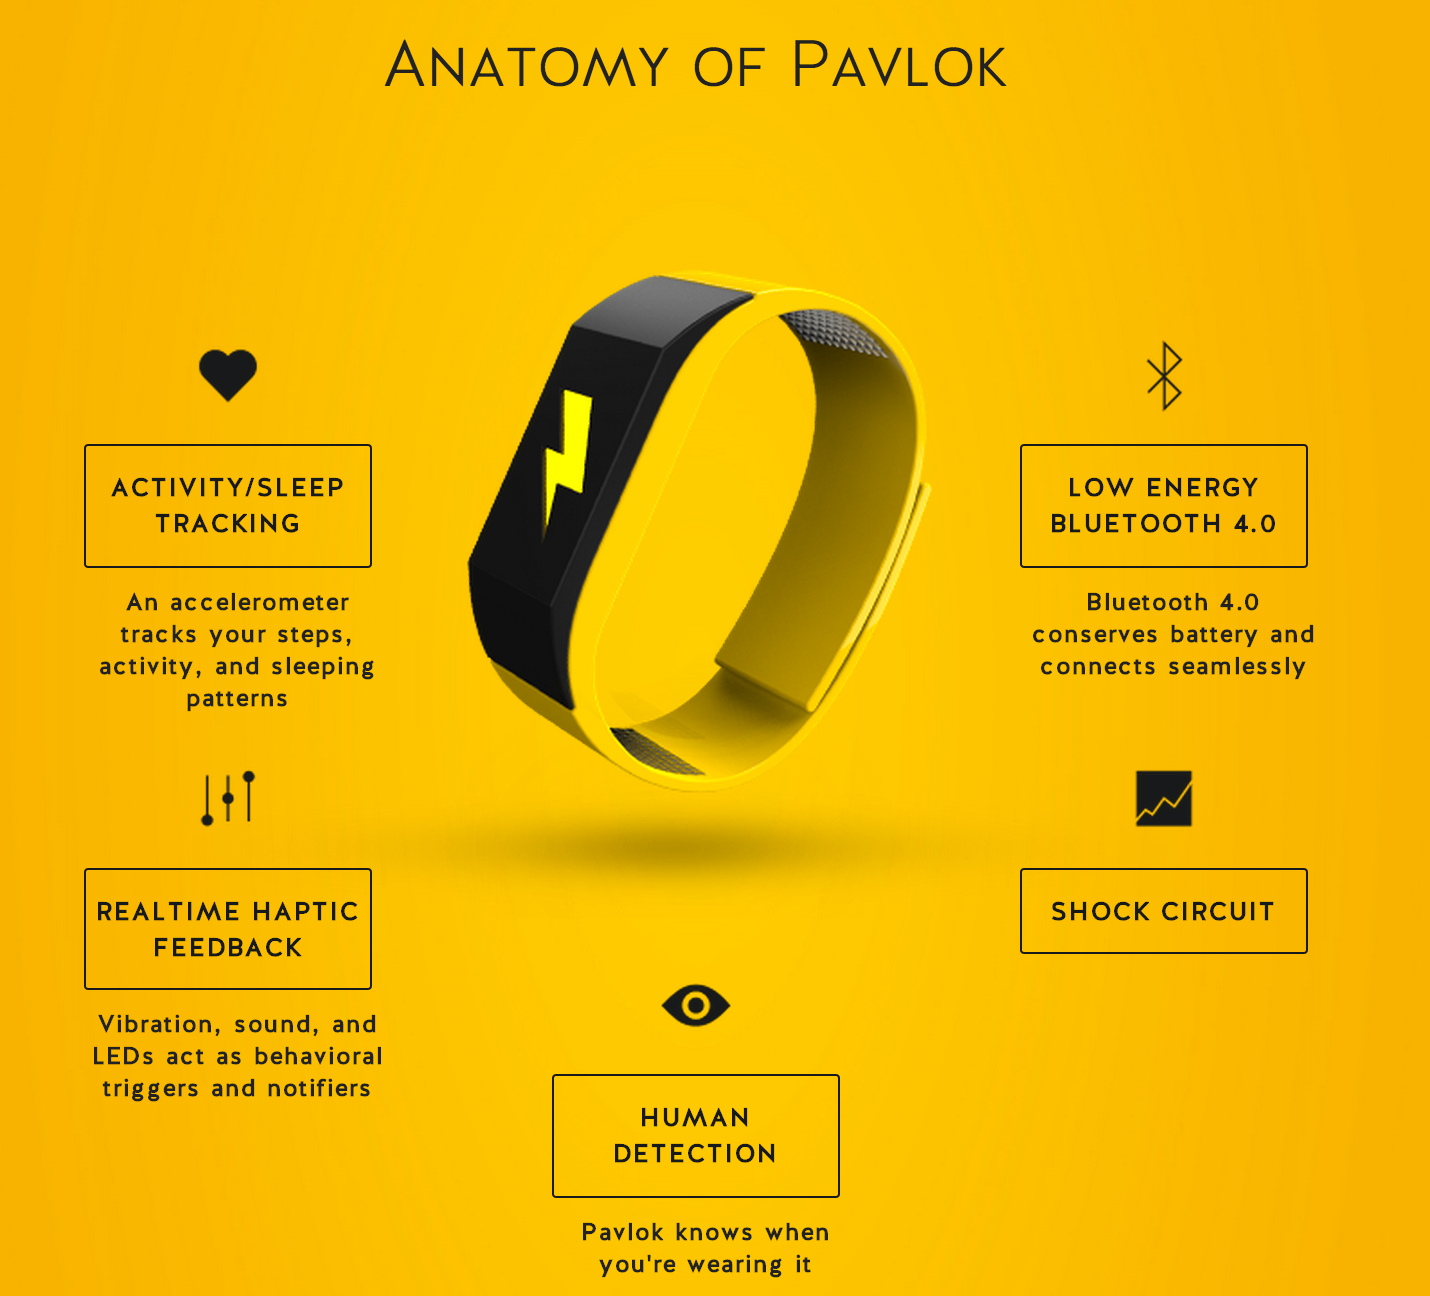 Pavlok - Recent News & Activity